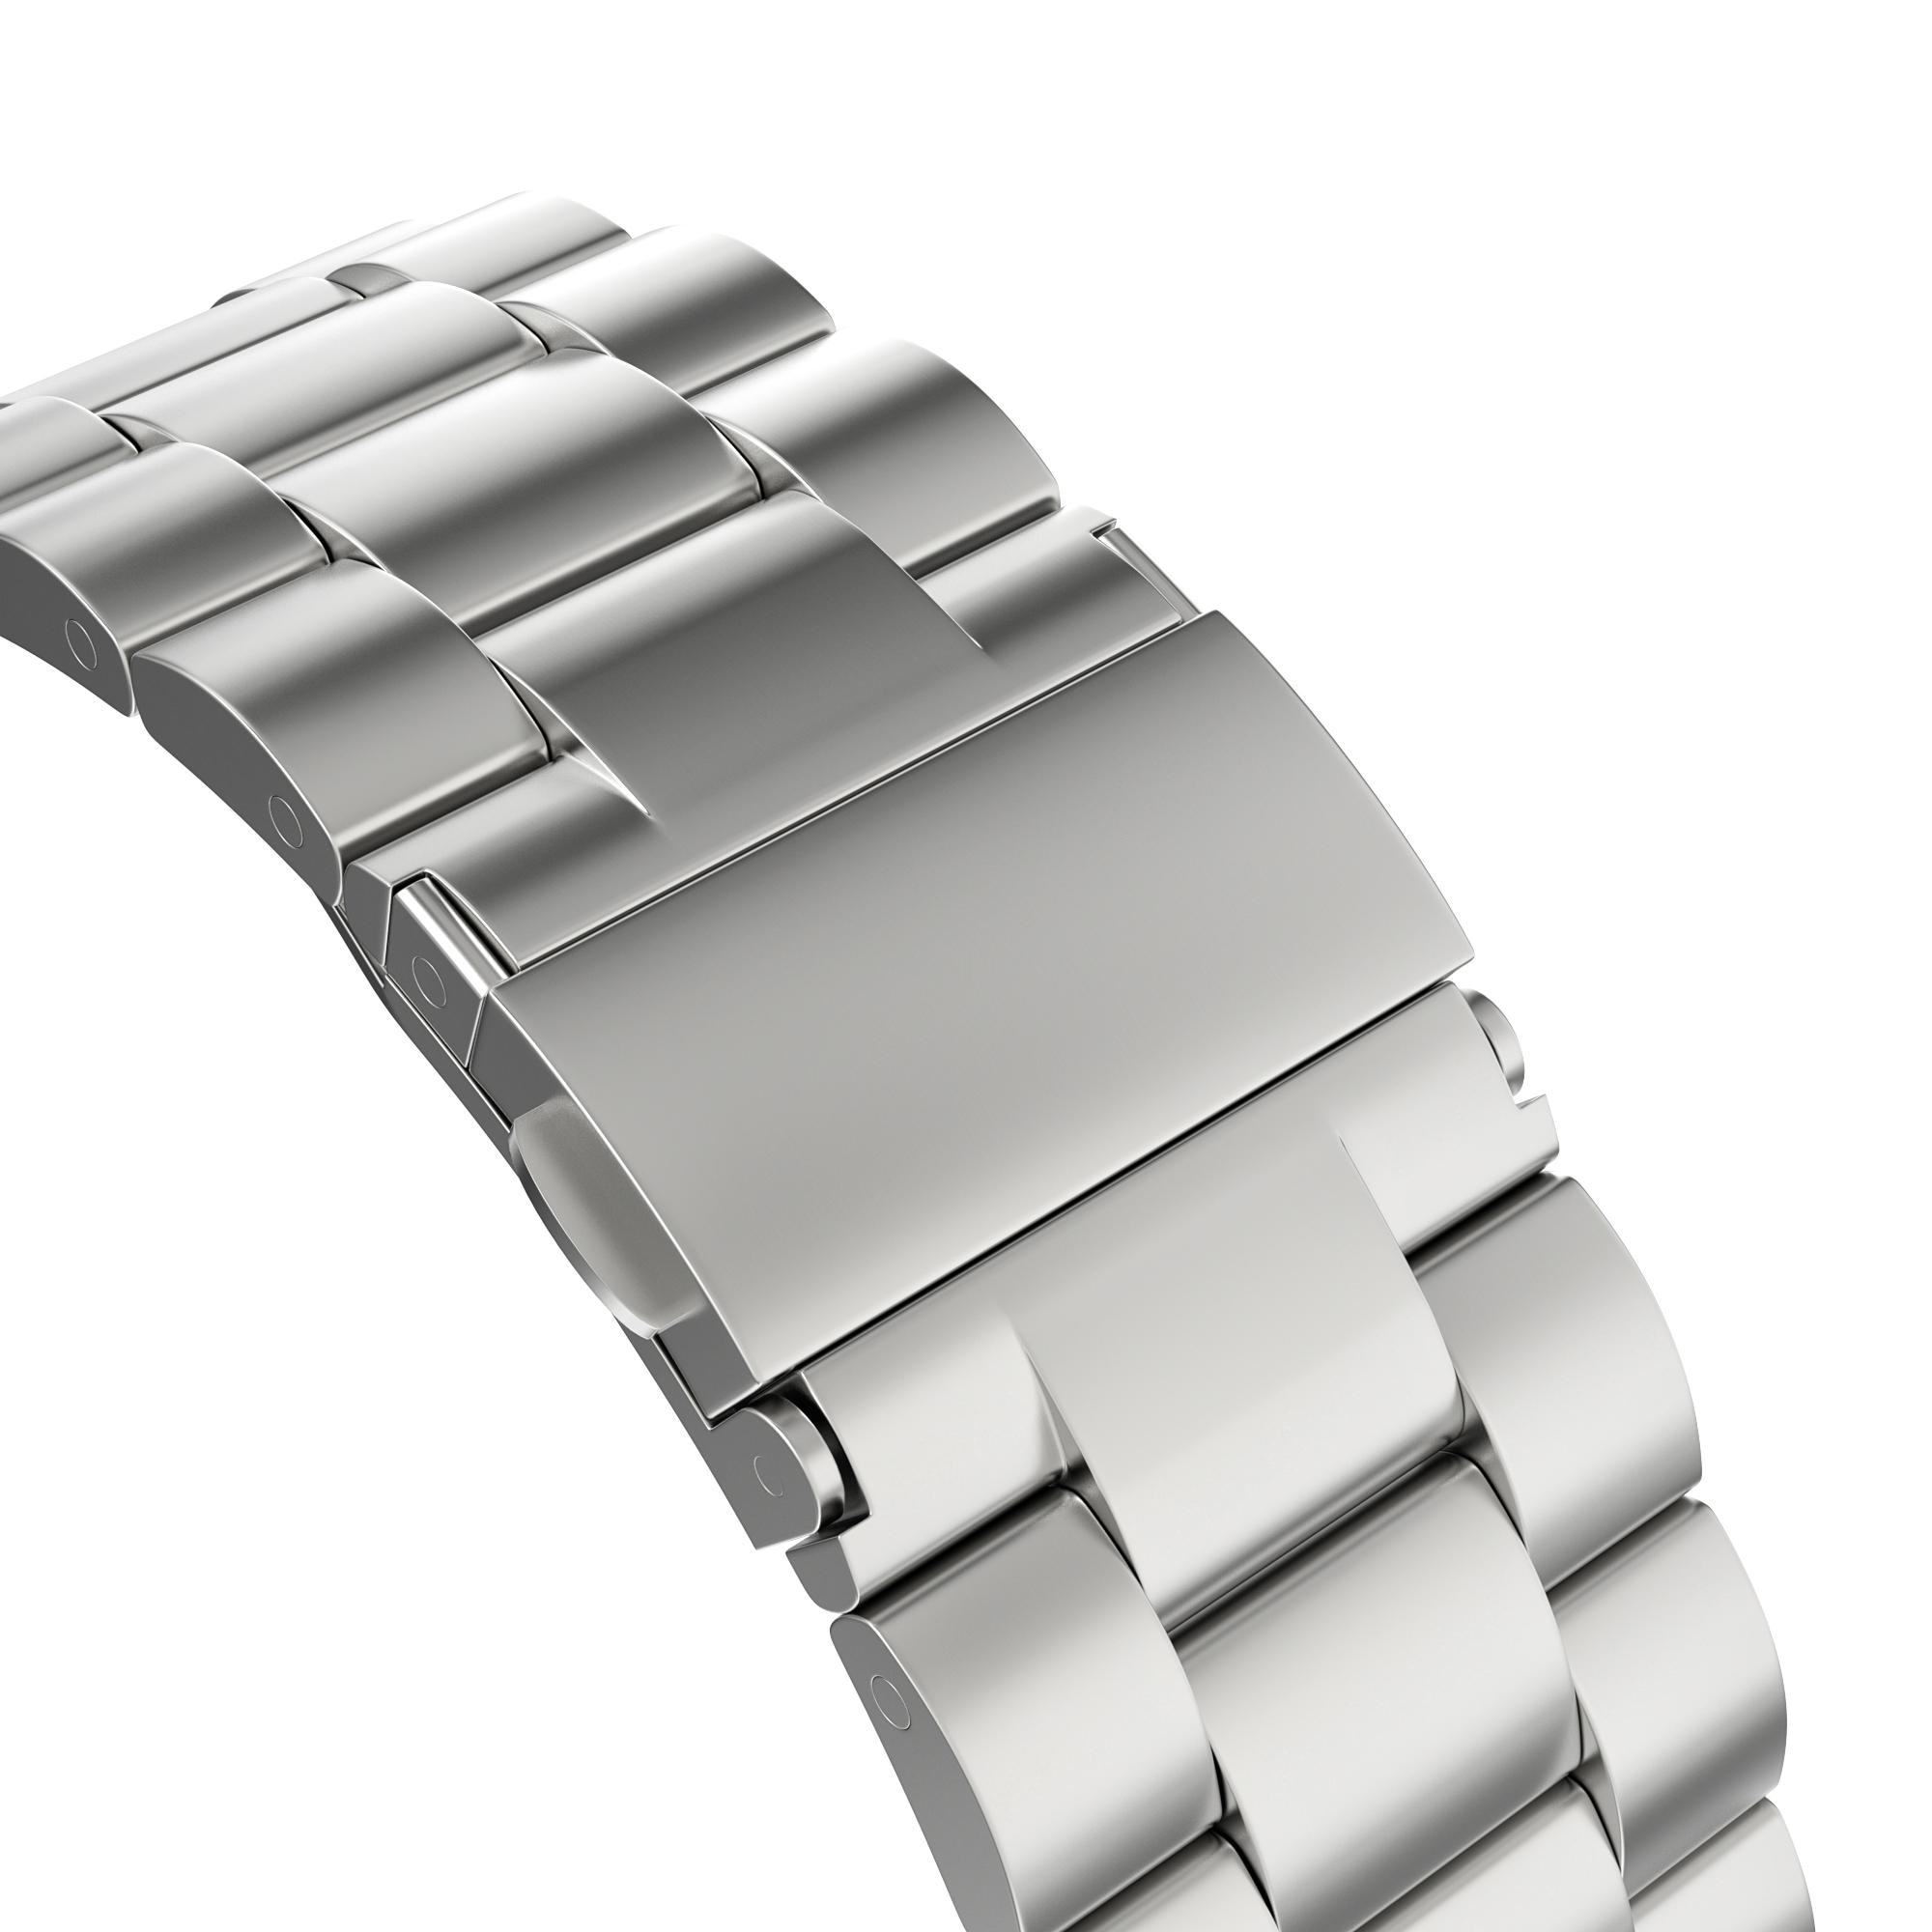 Apple Watch 40mm Stilrent länkarmband i metall, silver